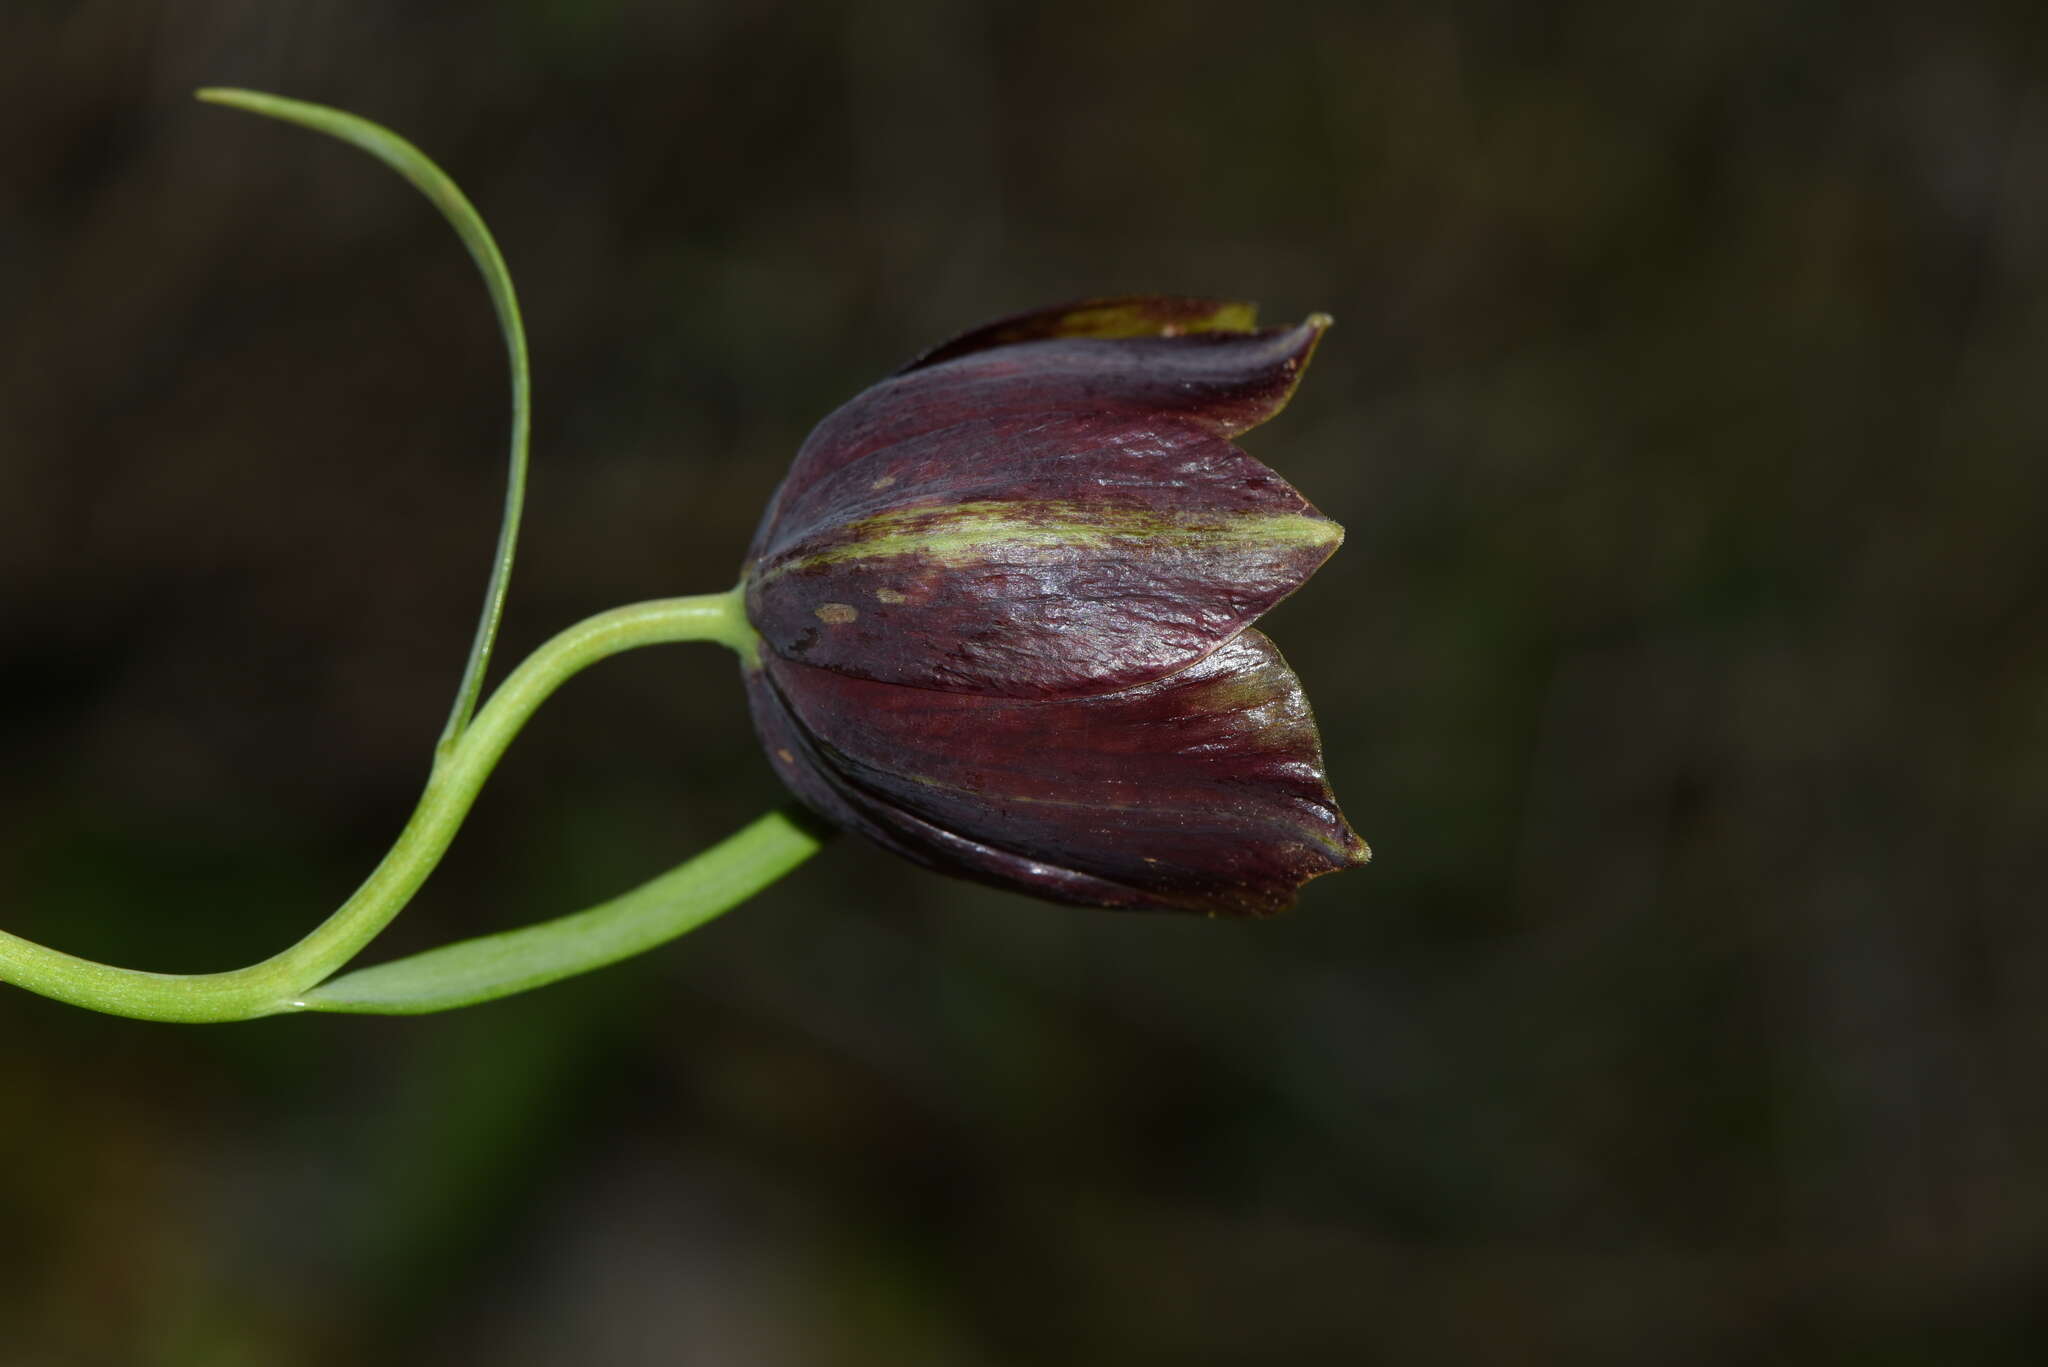 Image of Fritillaria messanensis subsp. gracilis (Ebel) Rix